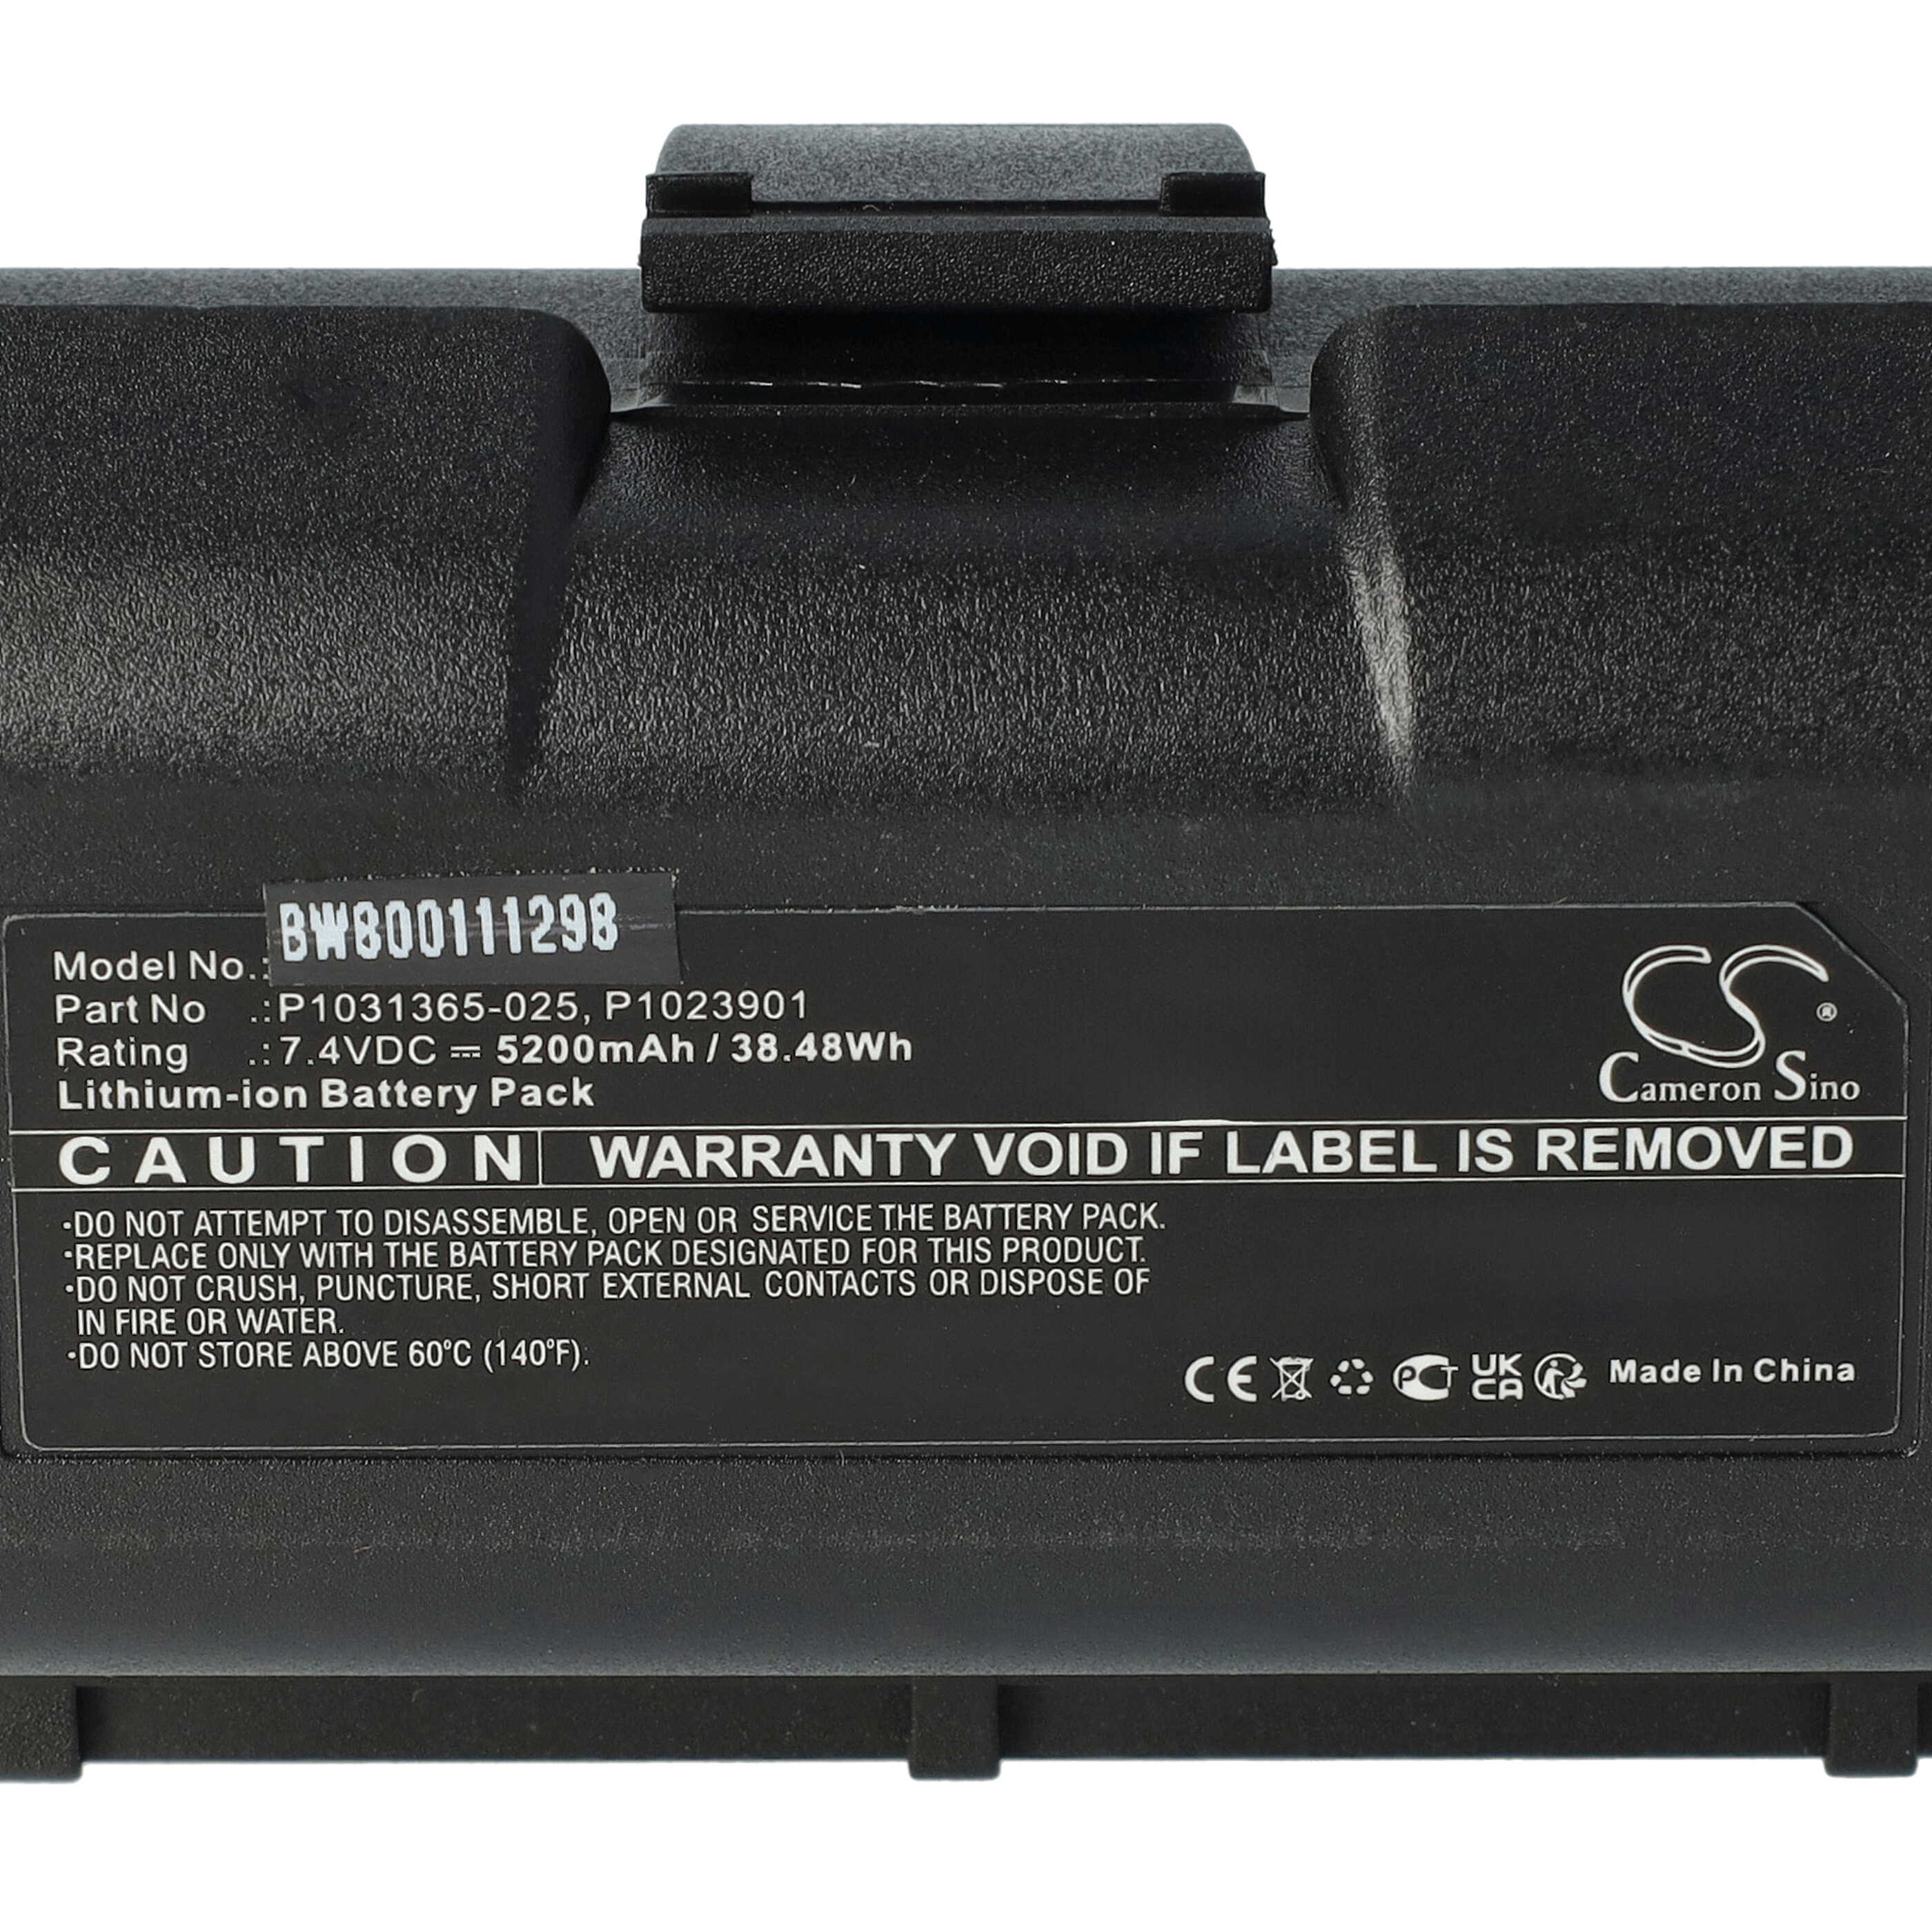 Batterie remplace Zebra AT16004, BTRY-MPP-34MA1-01, BTRY-MPP-34MAHC1-01 pour imprimante - 5200mAh 7,4V Li-ion